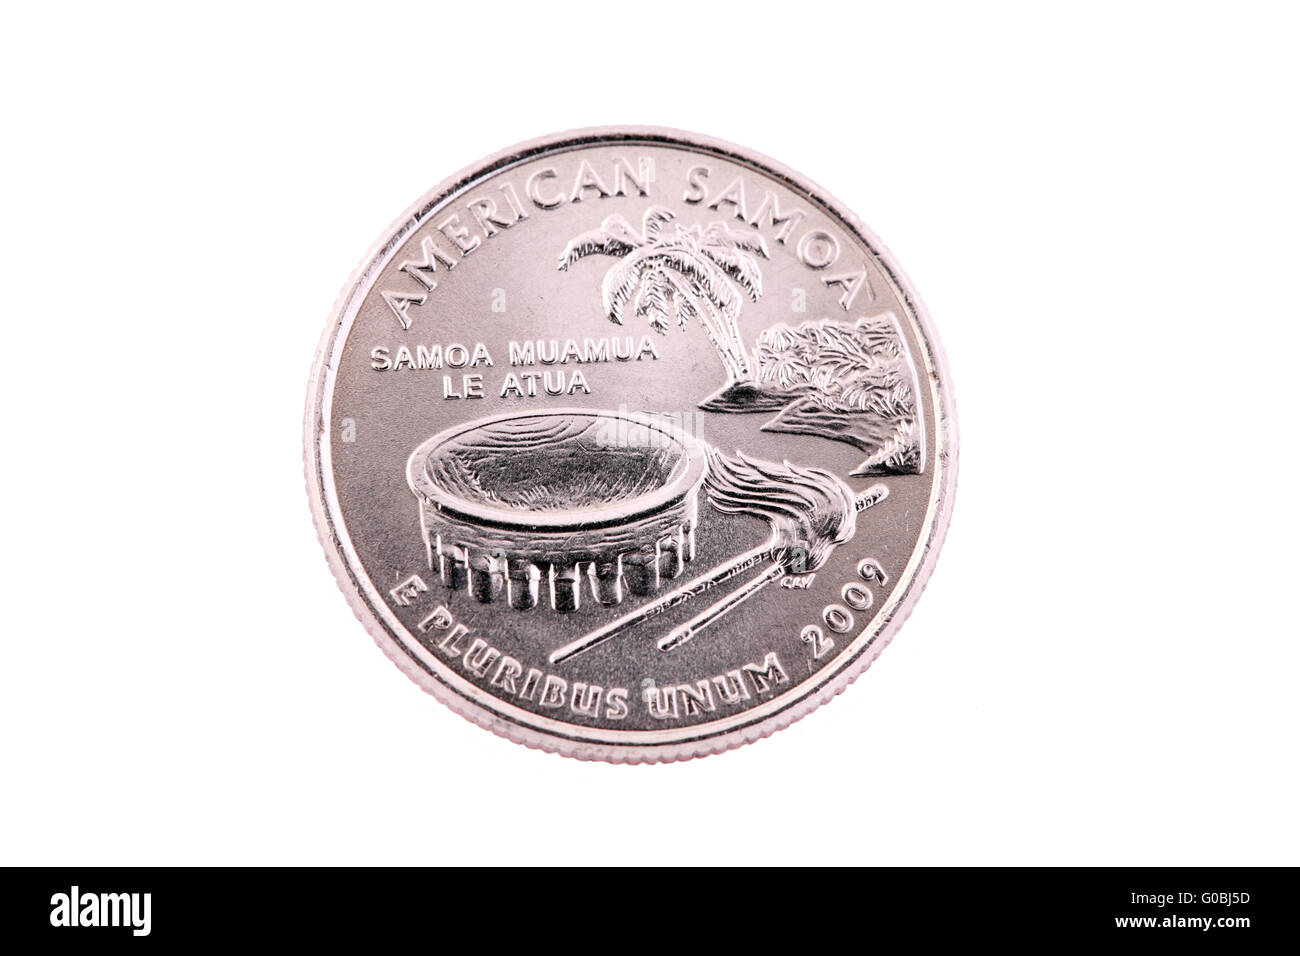 American Samoa quarter coin against white background Stock Photo